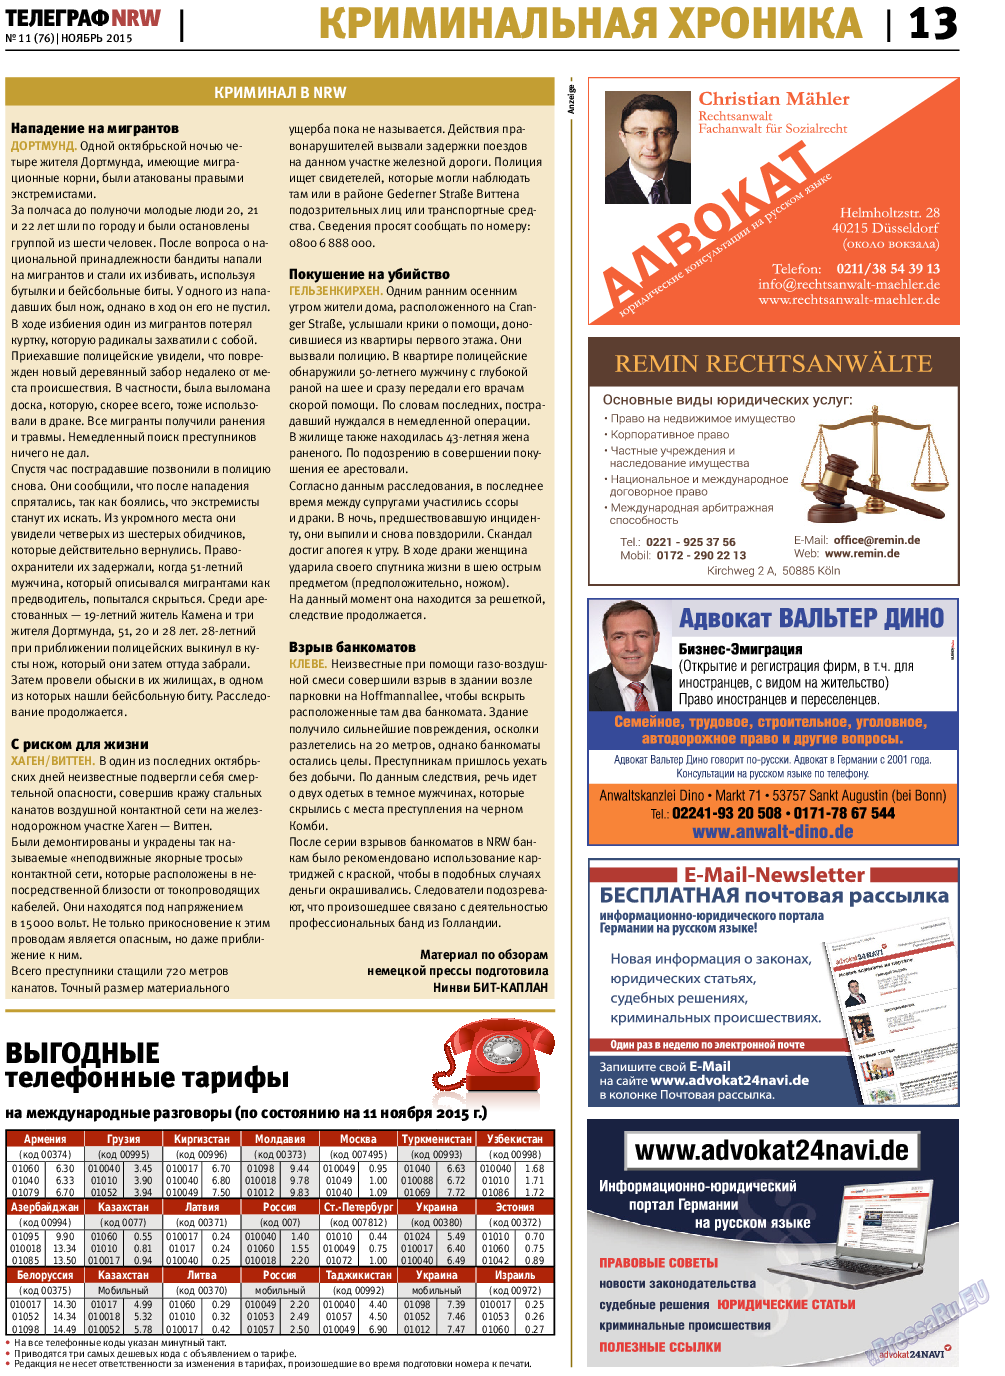 Телеграф NRW, газета. 2015 №11 стр.13